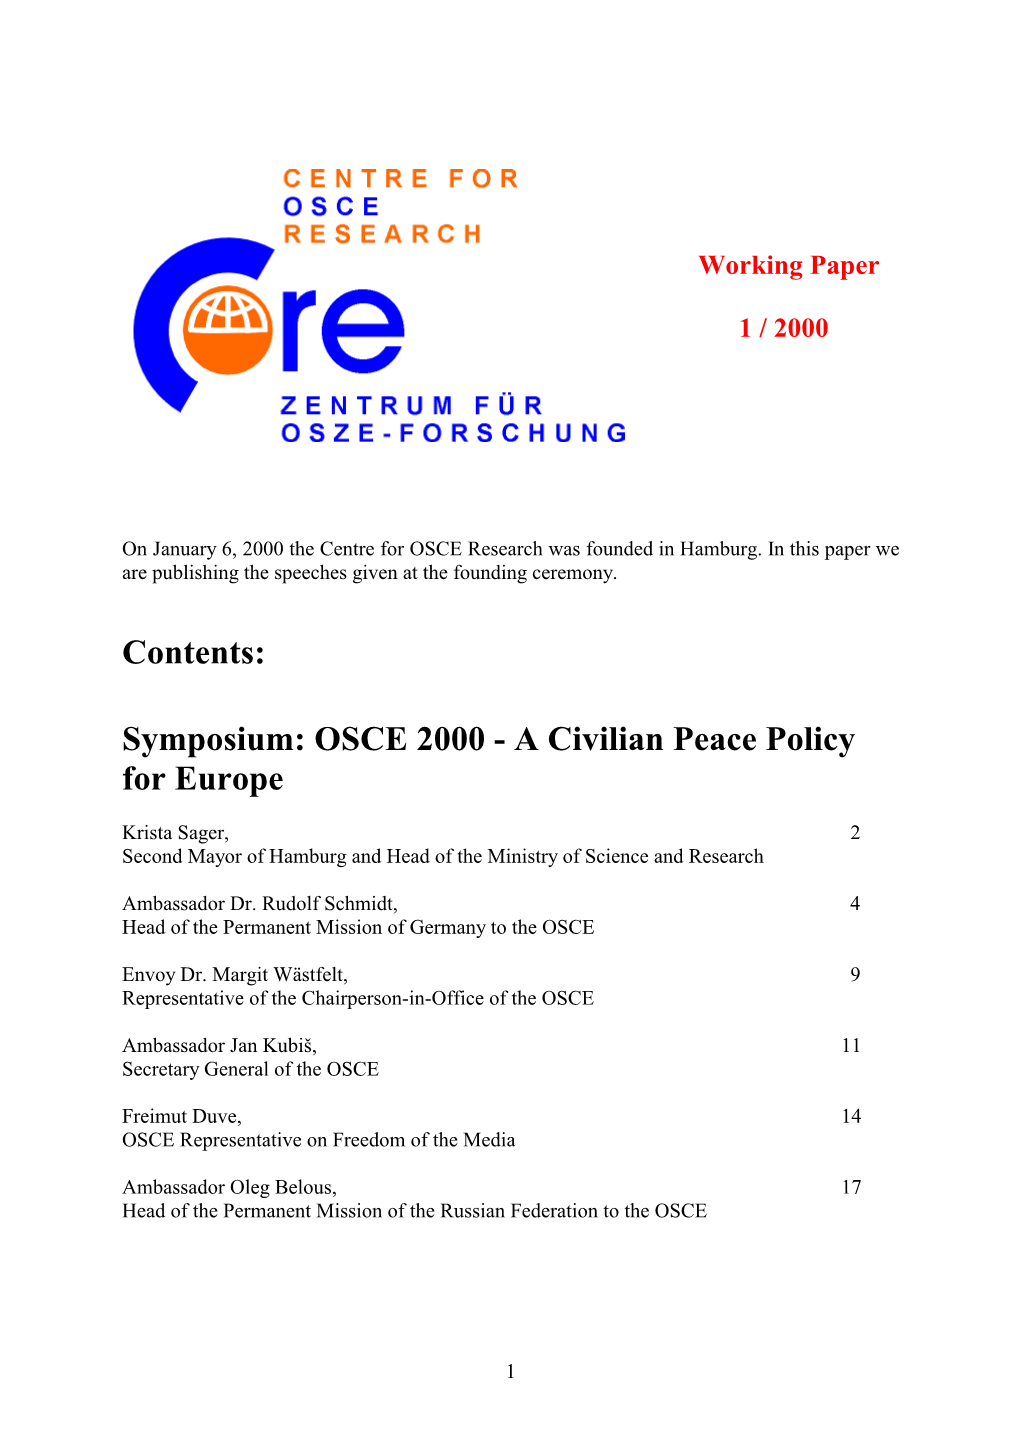 Symposium: OSCE 2000 - a Civilian Peace Policy for Europe